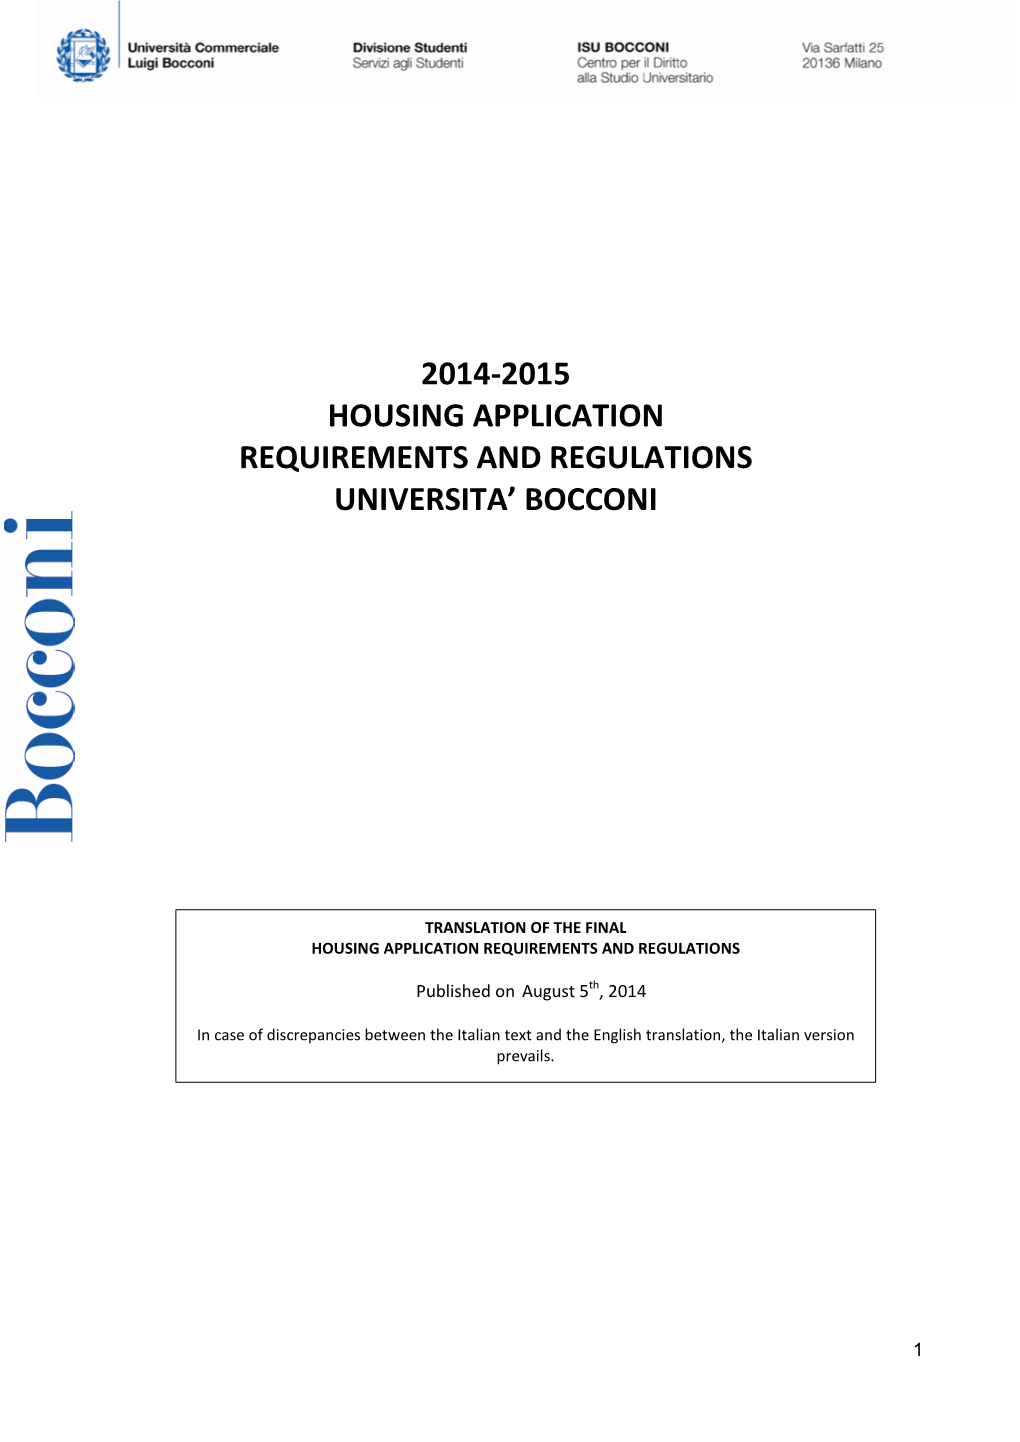 2014-2015 Housing Application Requirements and Regulations Universita’ Bocconi